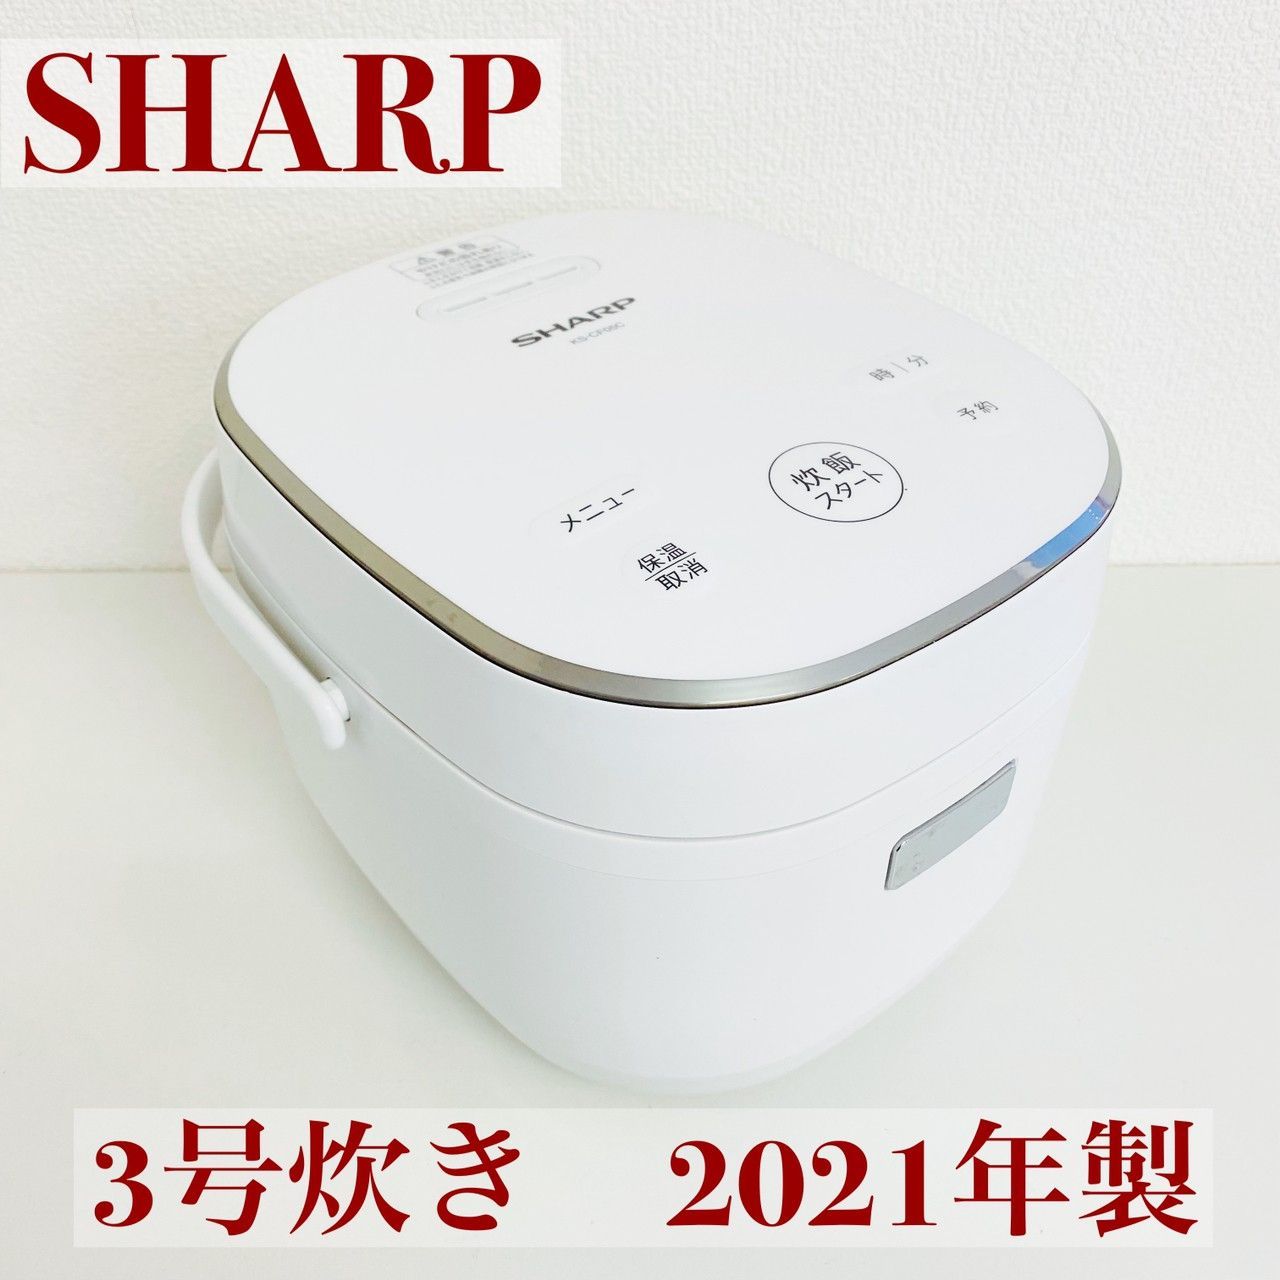 SHARP シャープ ジャー炊飯器 3合炊き KS-CF05C-W 2021年製 ホワイト 白